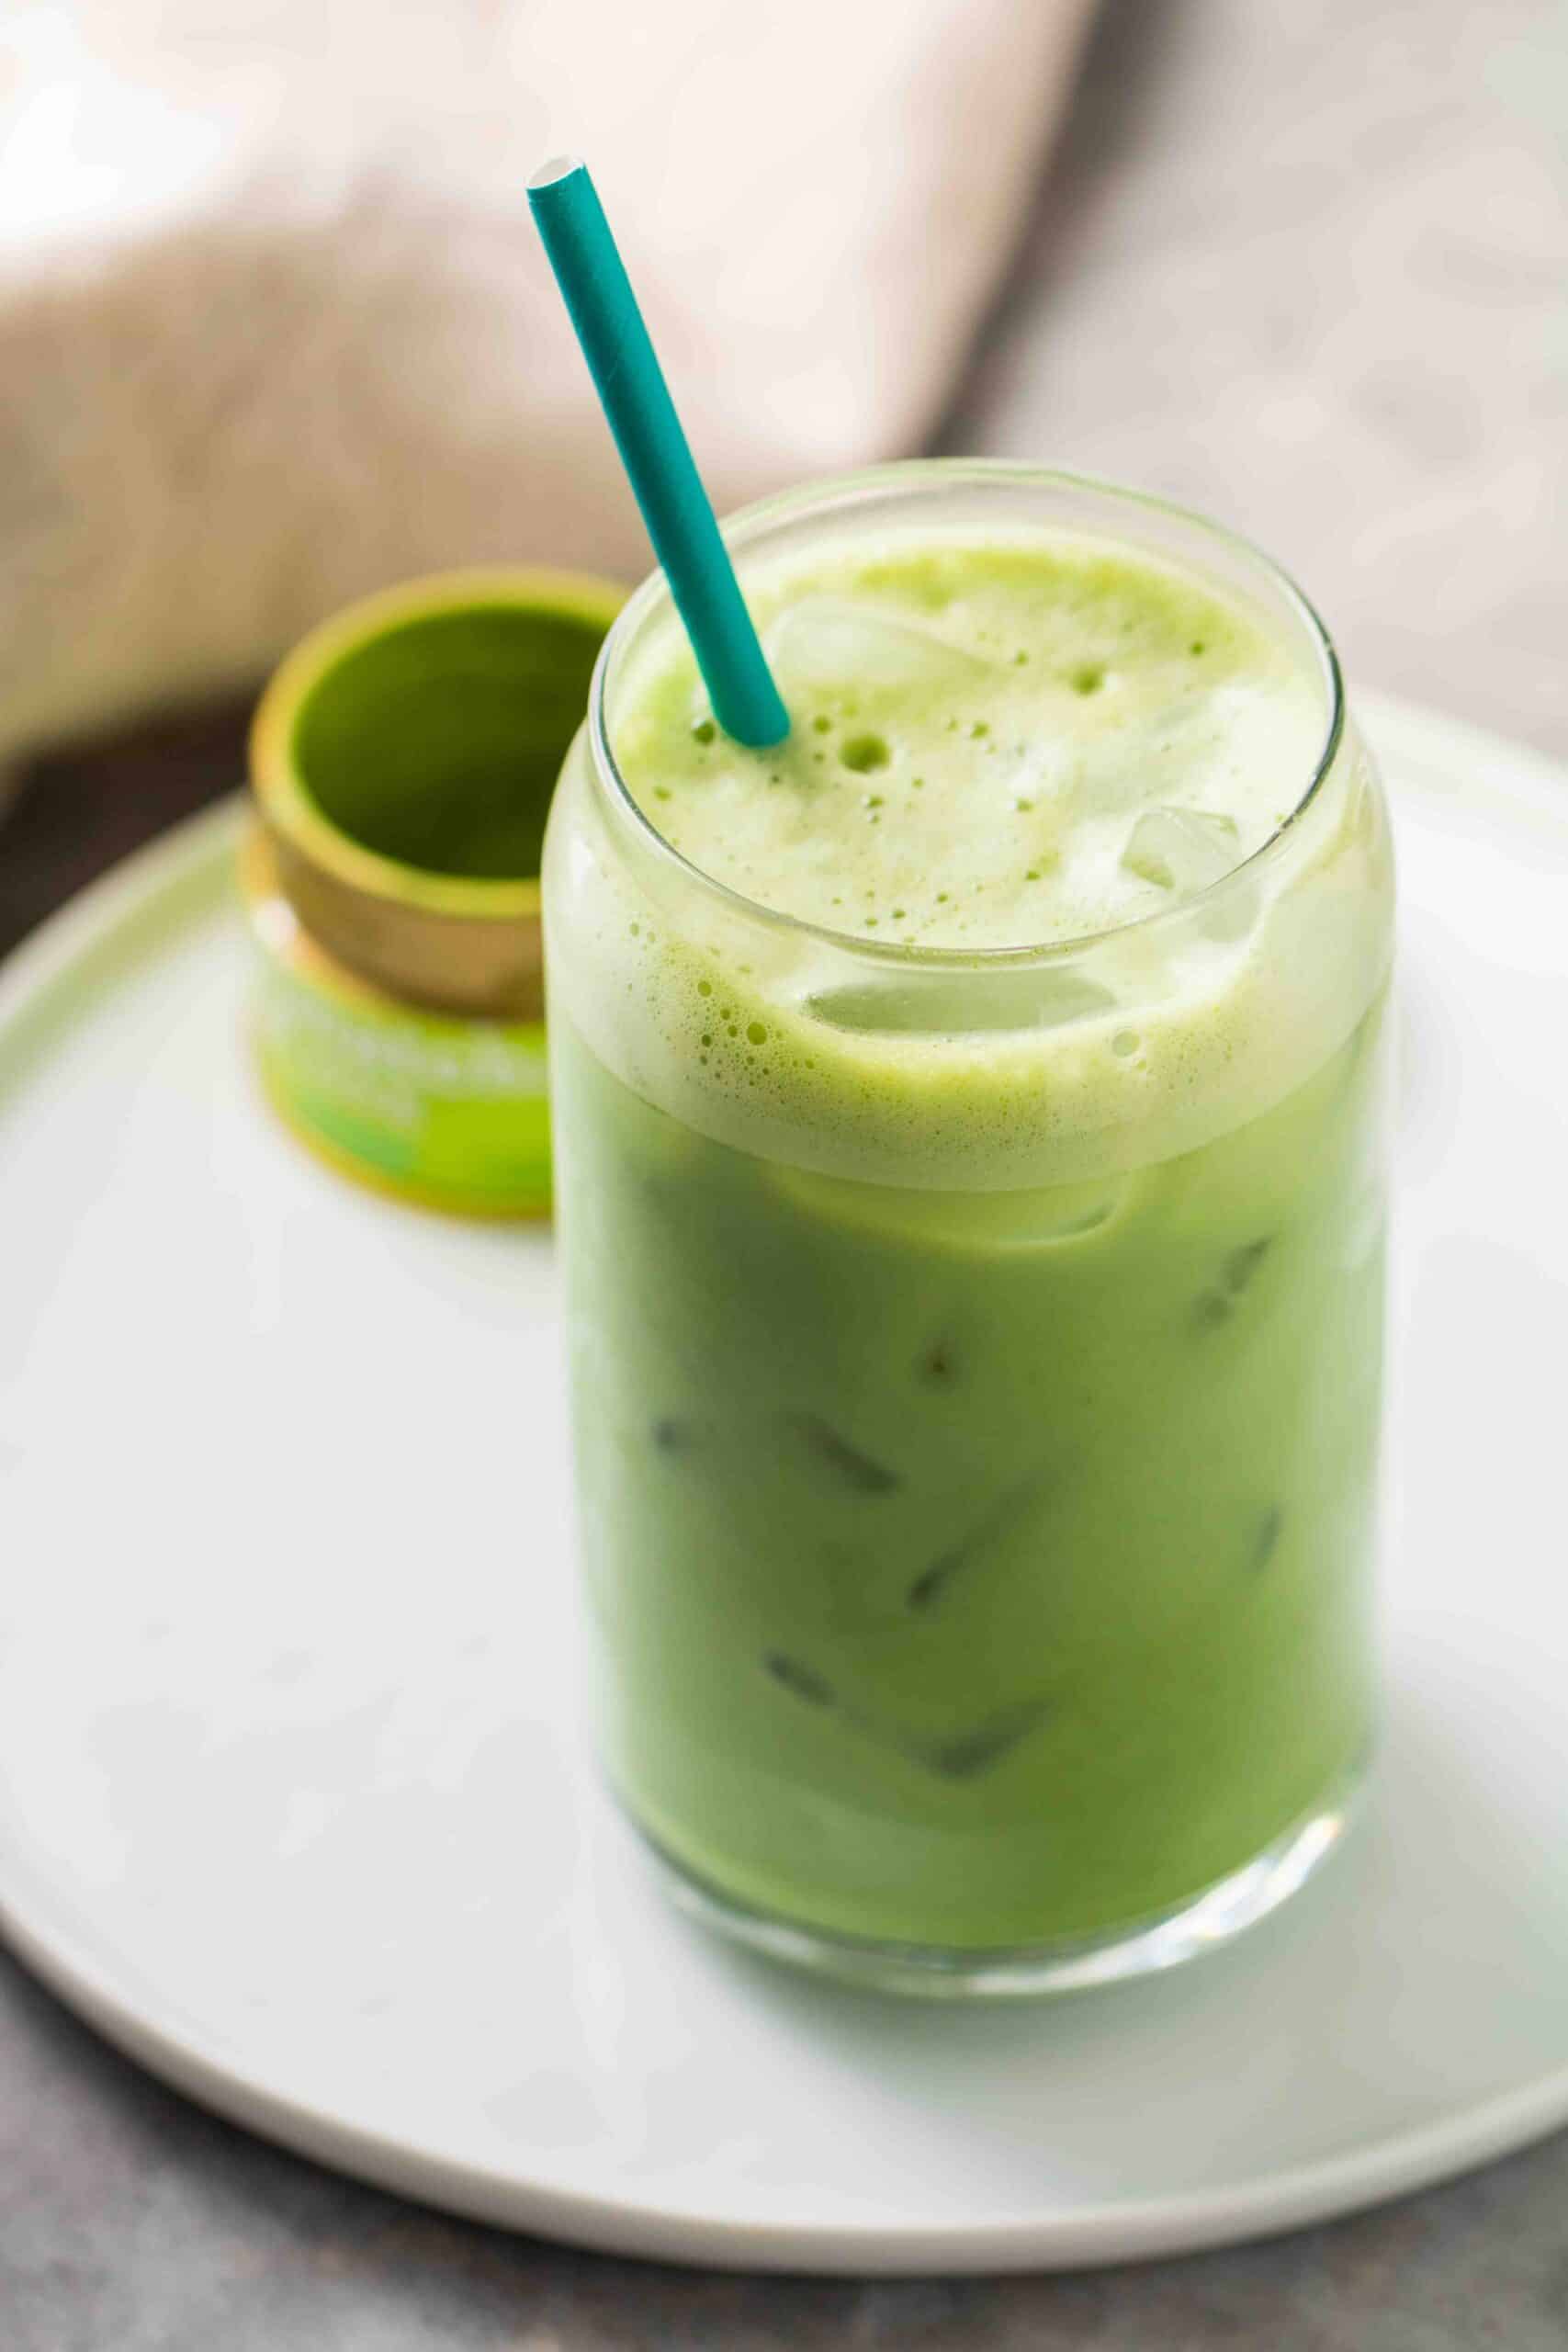 https://lifestyleofafoodie.com/wp-content/uploads/2020/10/Starbucks-Iced-Matcha-Green-Tea-Latte-13-of-16-1-scaled.jpg